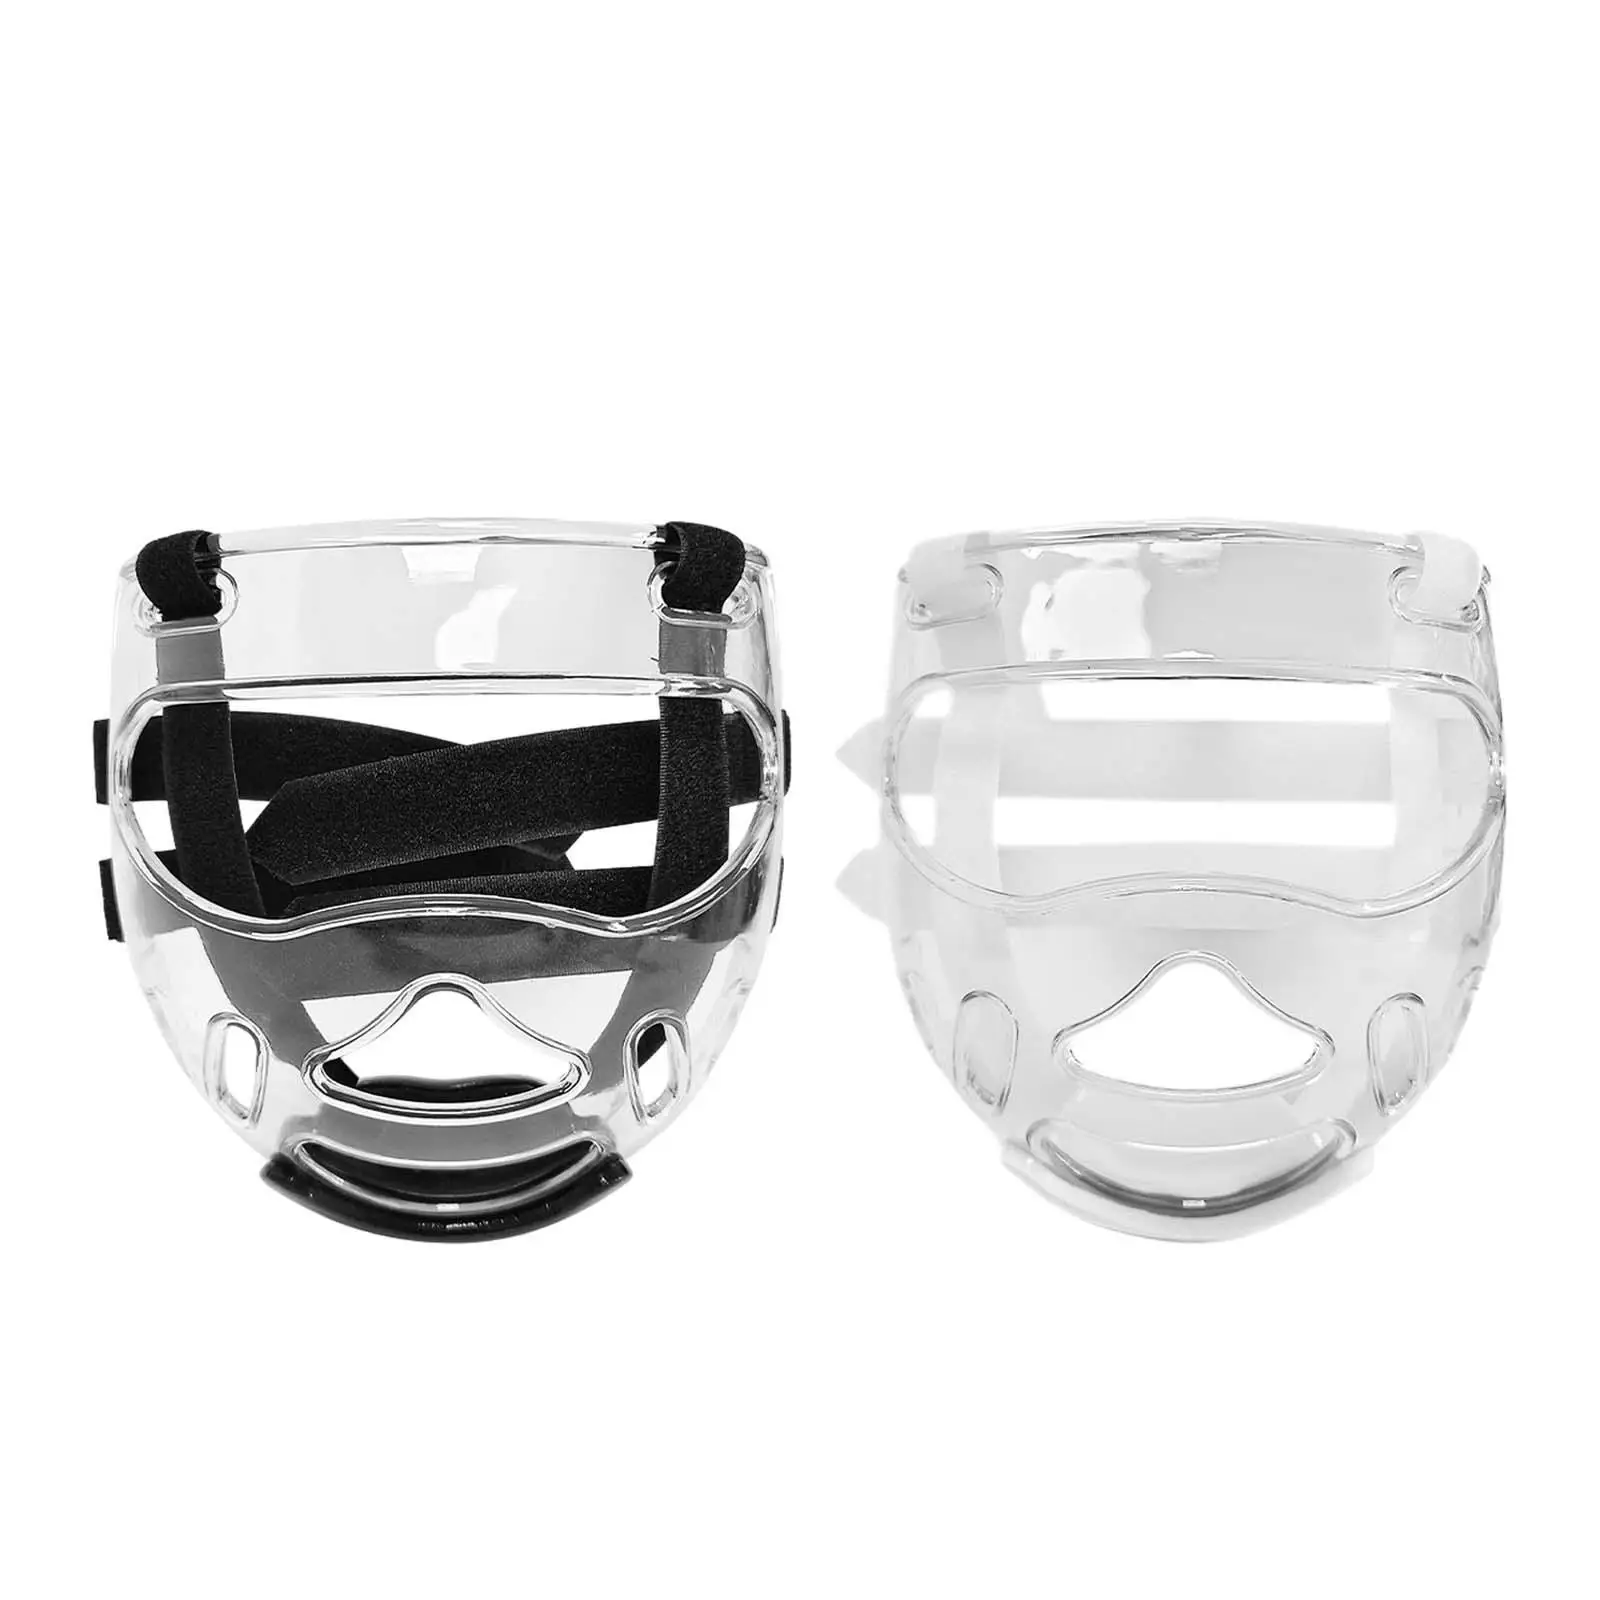 Taekwondo Face Mask Taekwondo Face Shield Boxing Headgear Mask Sparring Mask for Sparring Fighting Muay Thai Wrestling Sports